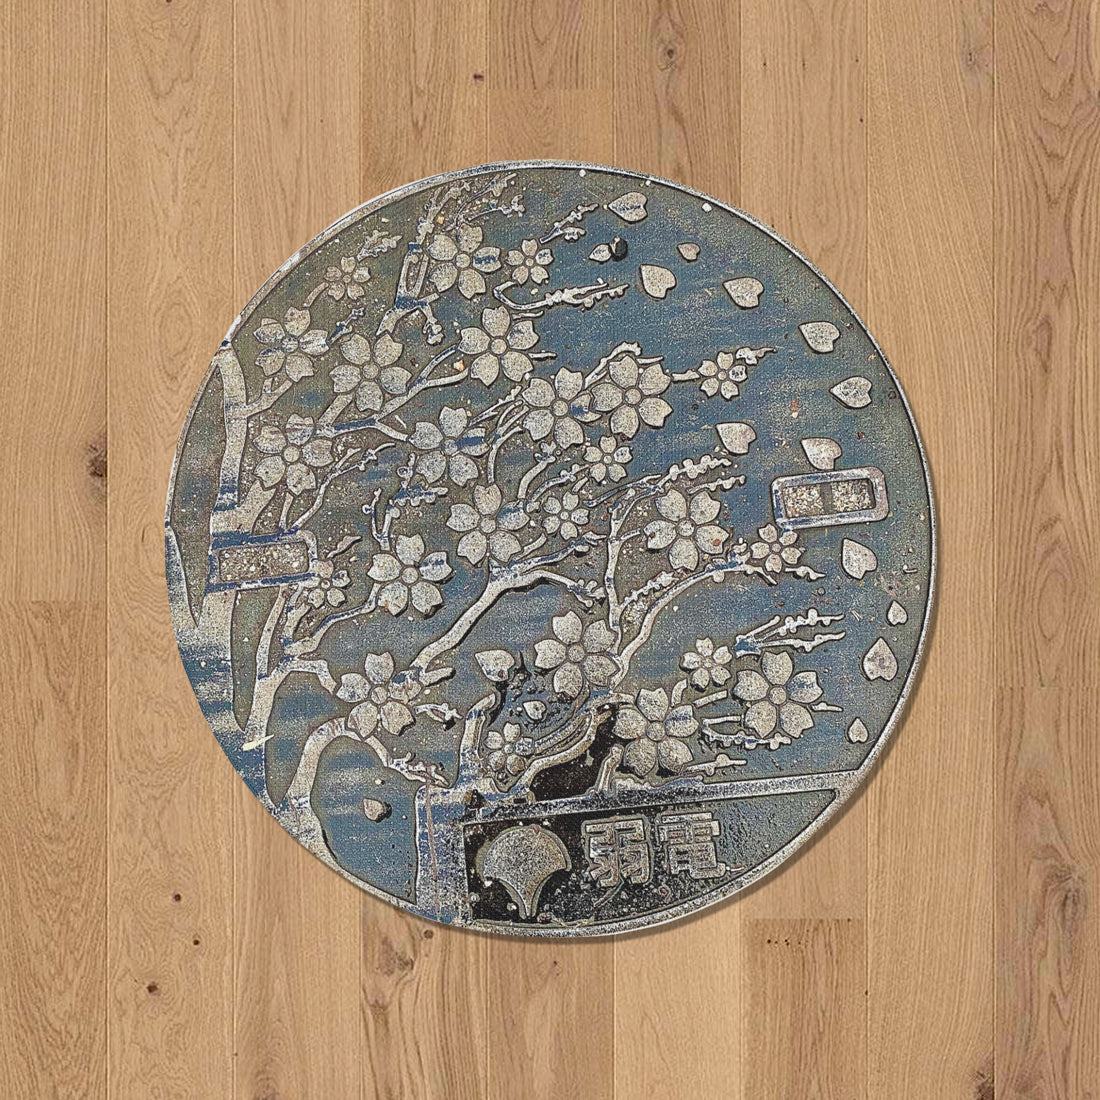 JAPAN SERIES - Sewer Cover Doormat, Trivet, Coaster - Ueno, Tokyo, Japan